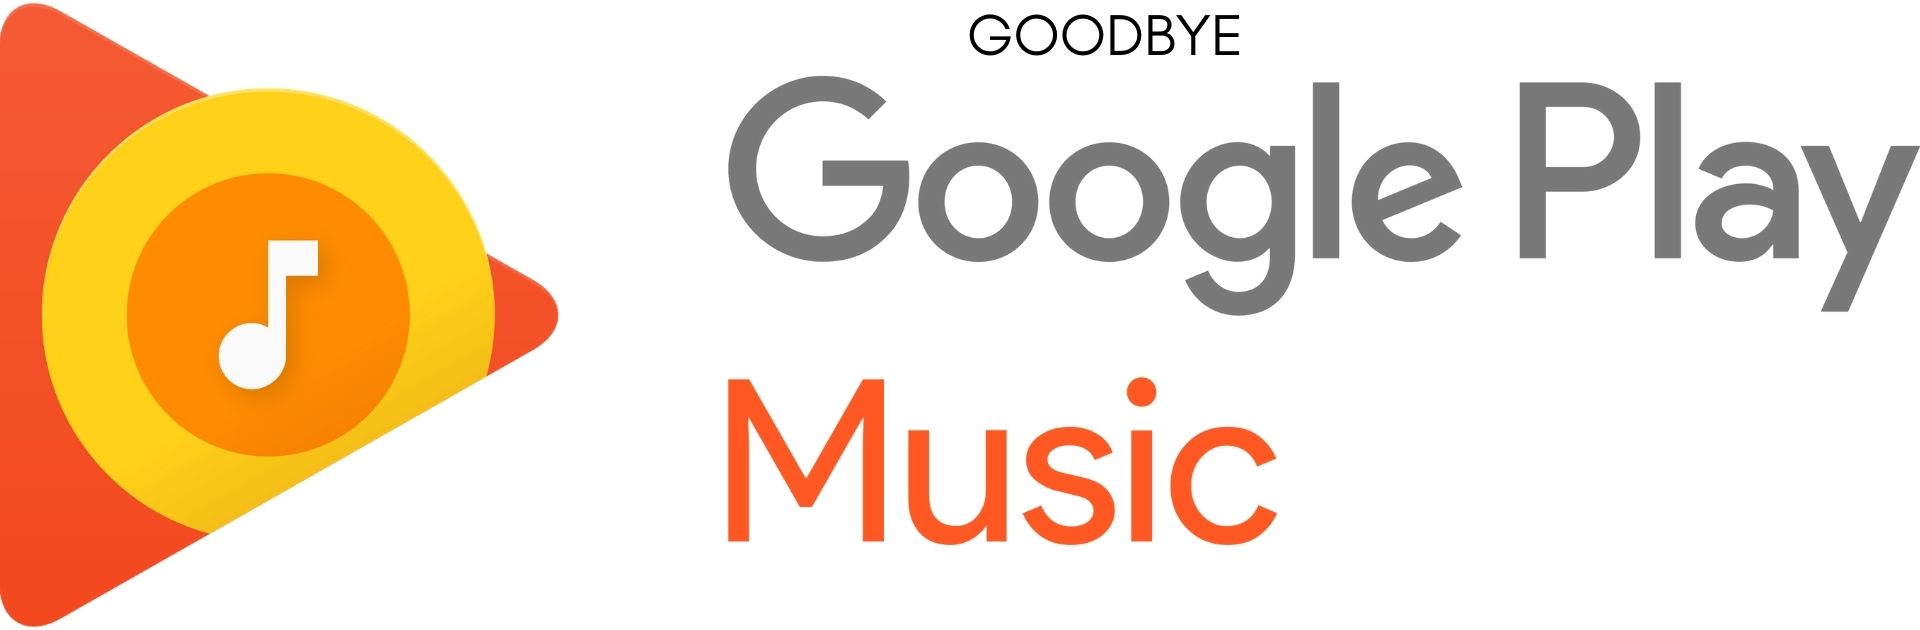 Goodbye Google Play Music